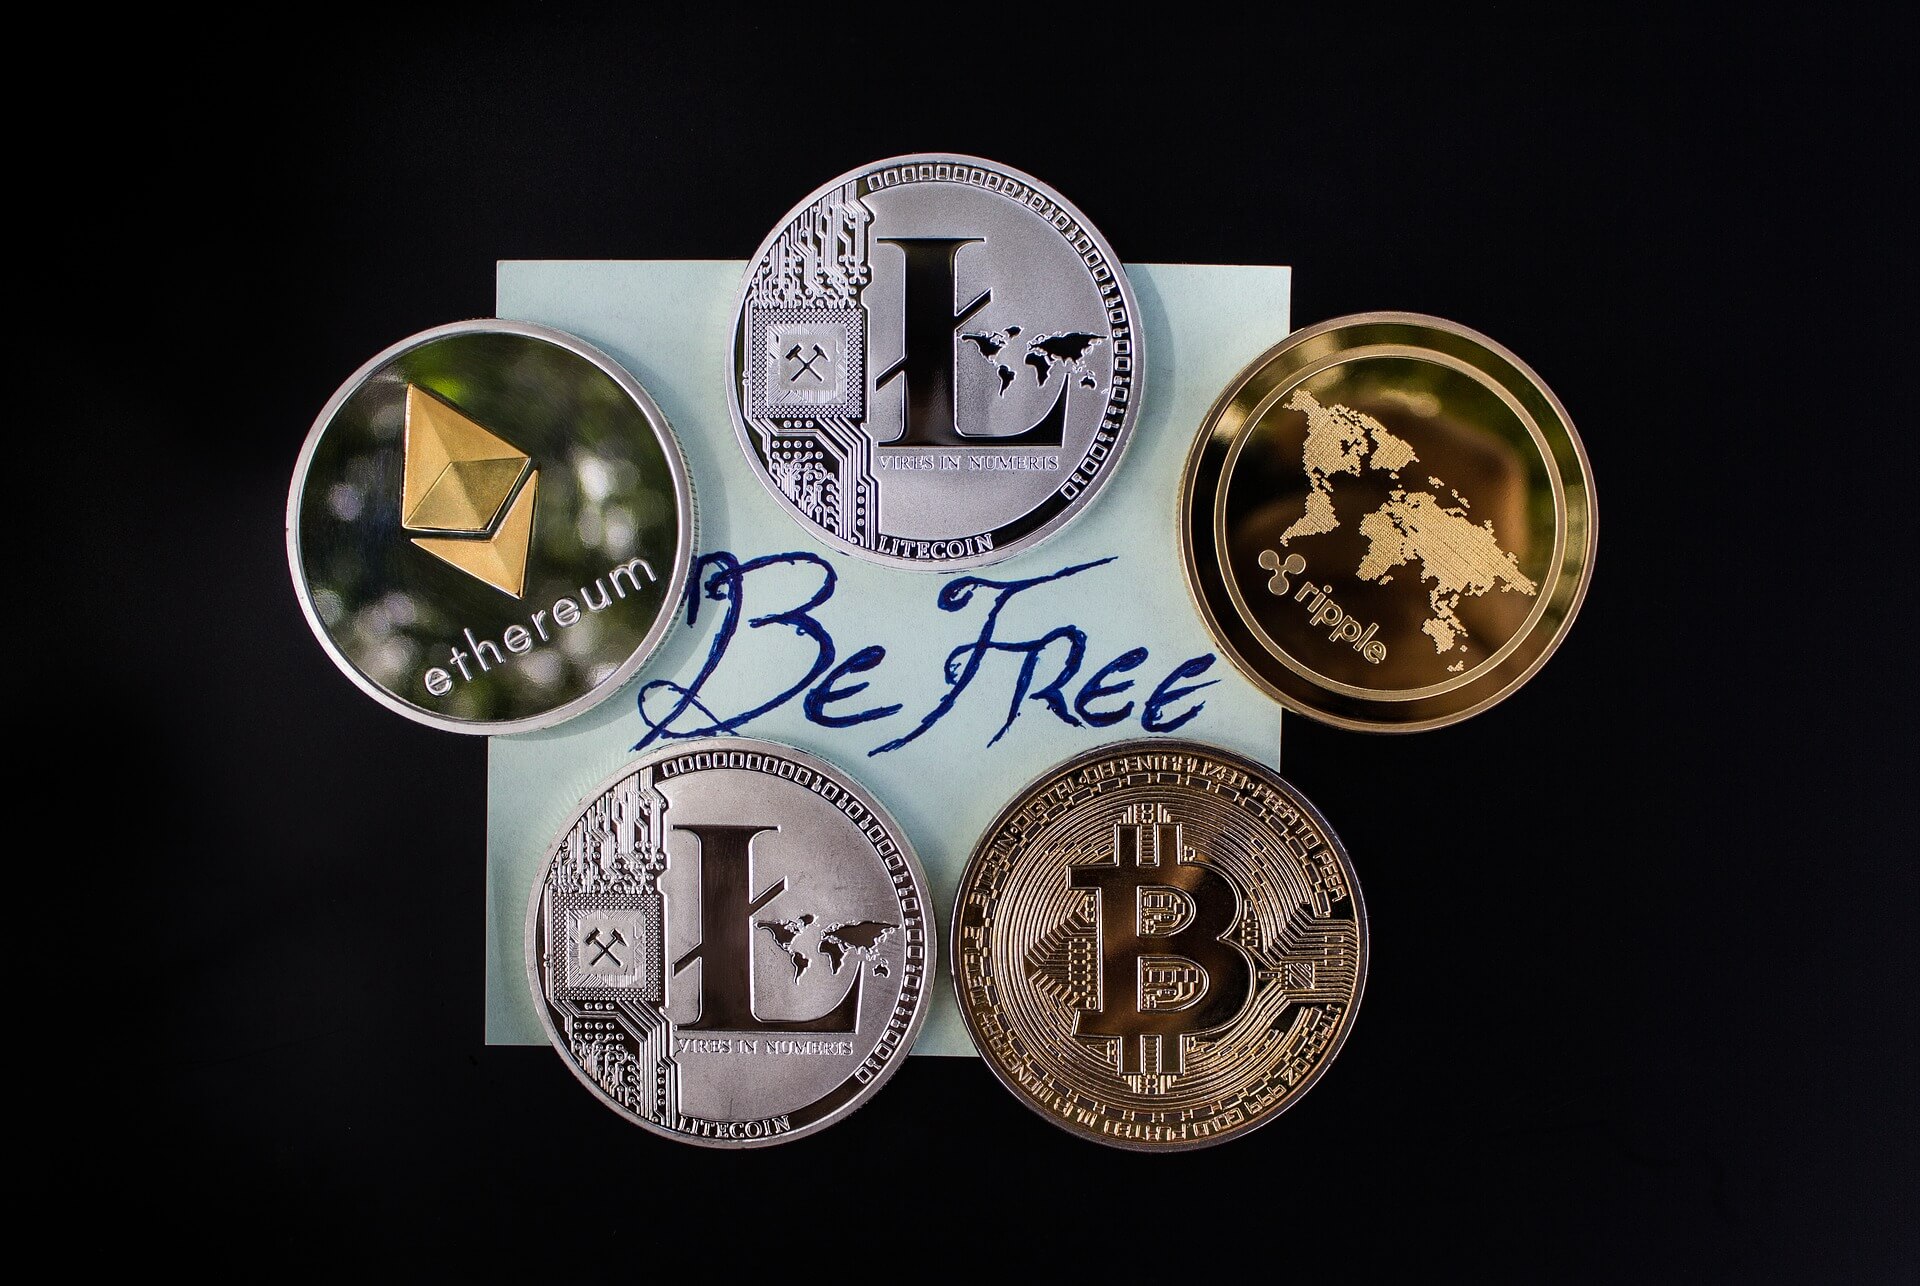 Crypto News Today - Bitcoin, ETH 2.0, and Digital Yuan